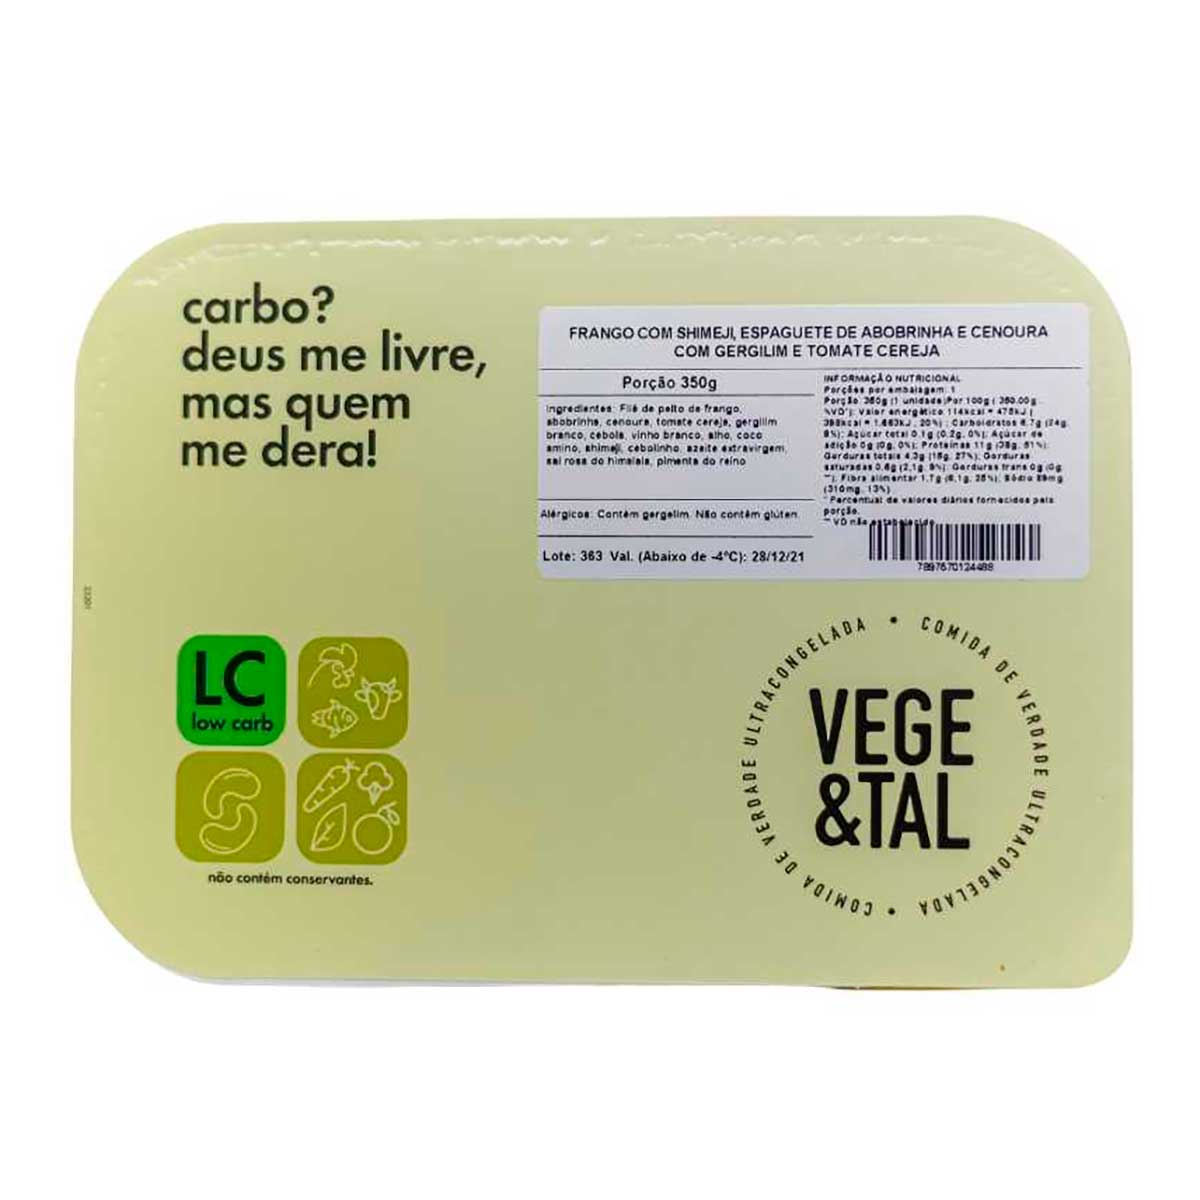 frango-shimeji-legumes-vege-&-tal-350-g-1.jpg